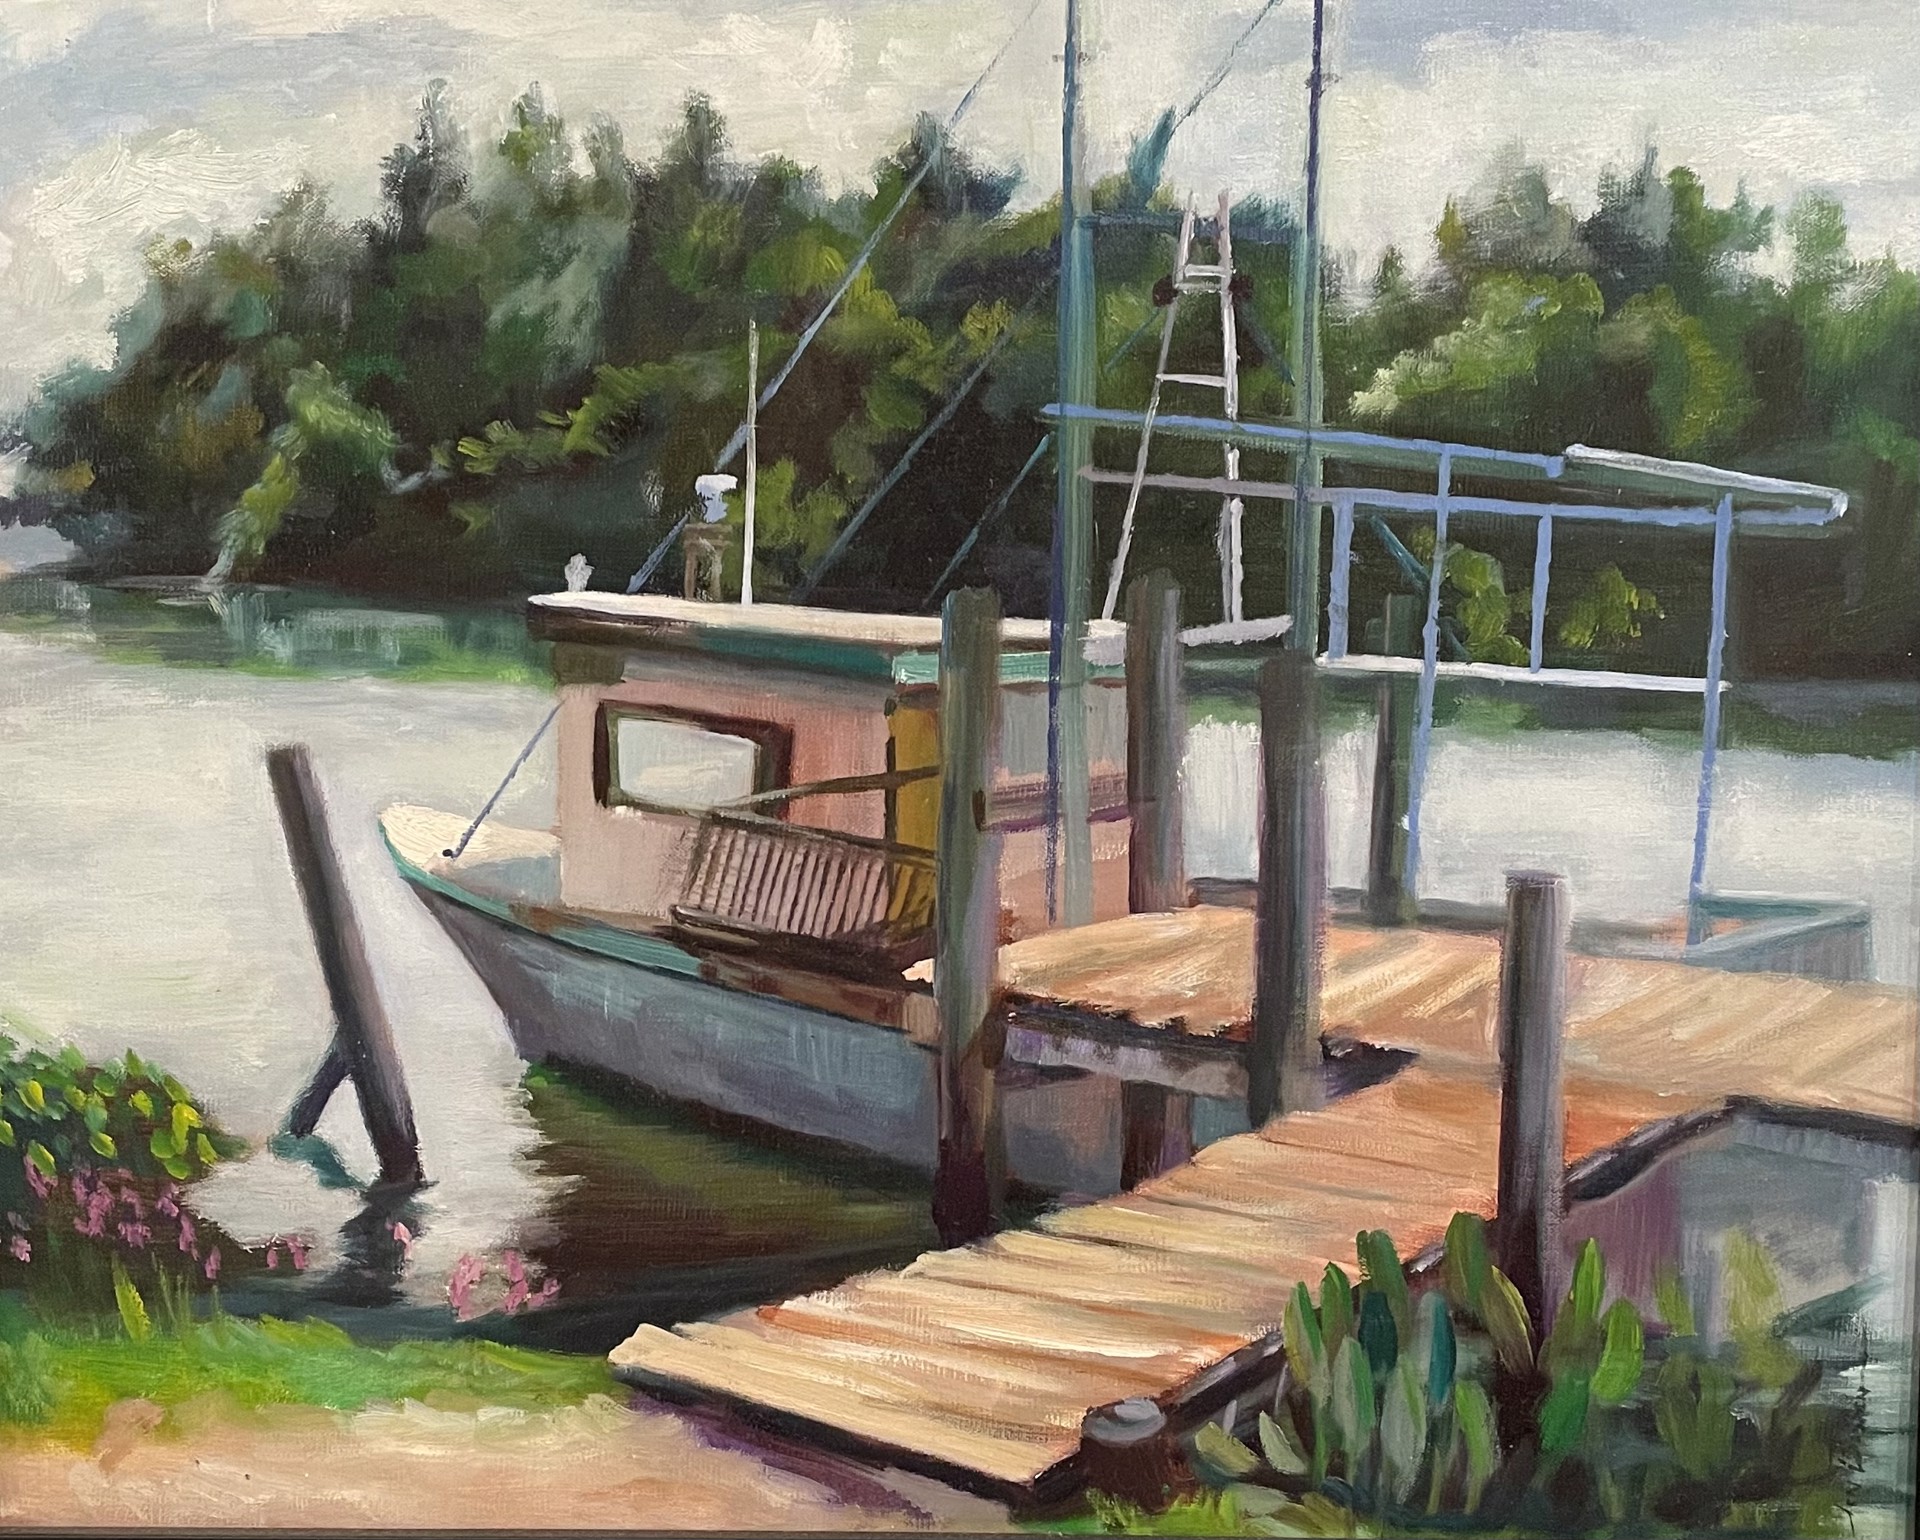 By the Dock of the Bay by Jen Bowen